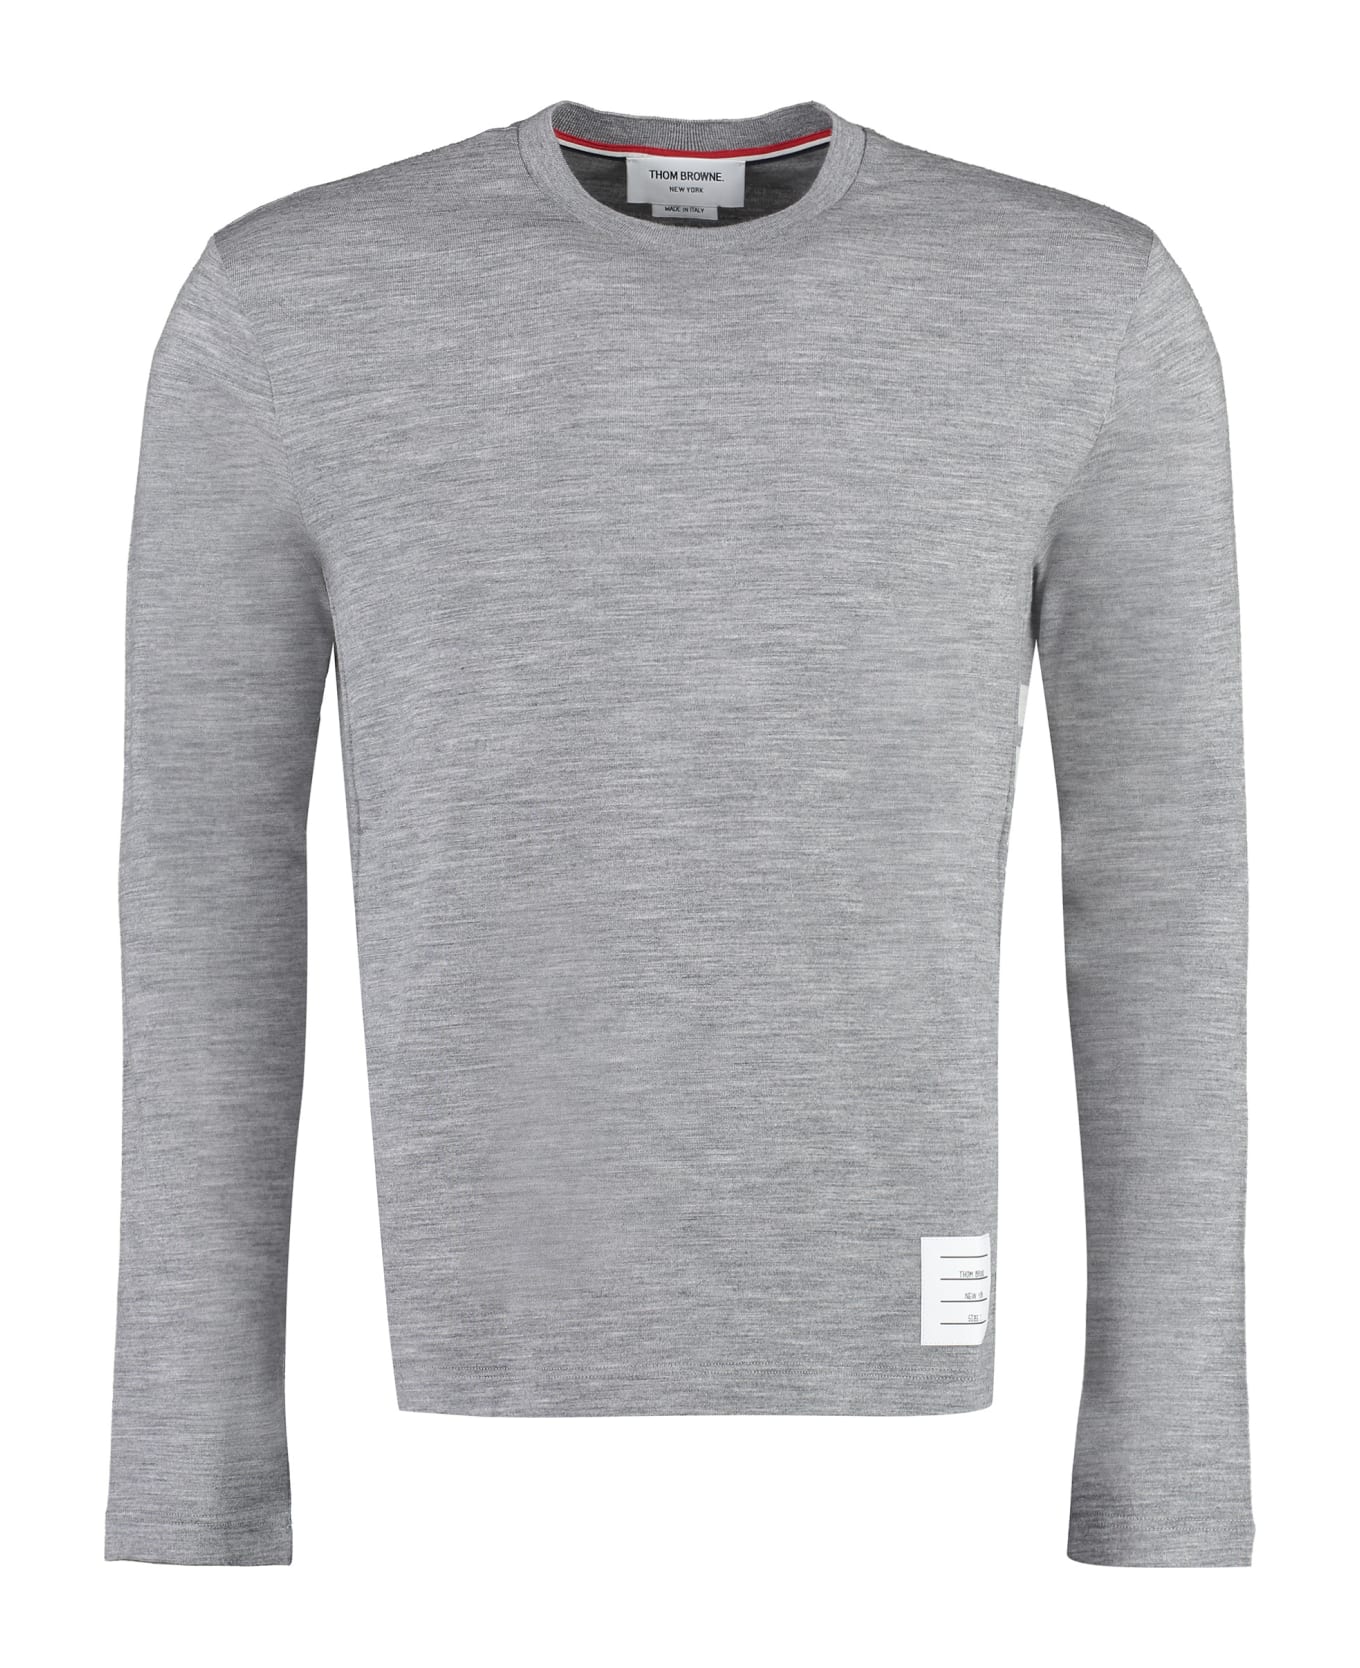 Thom Browne Long Sleeve Wool T-shirt - grey